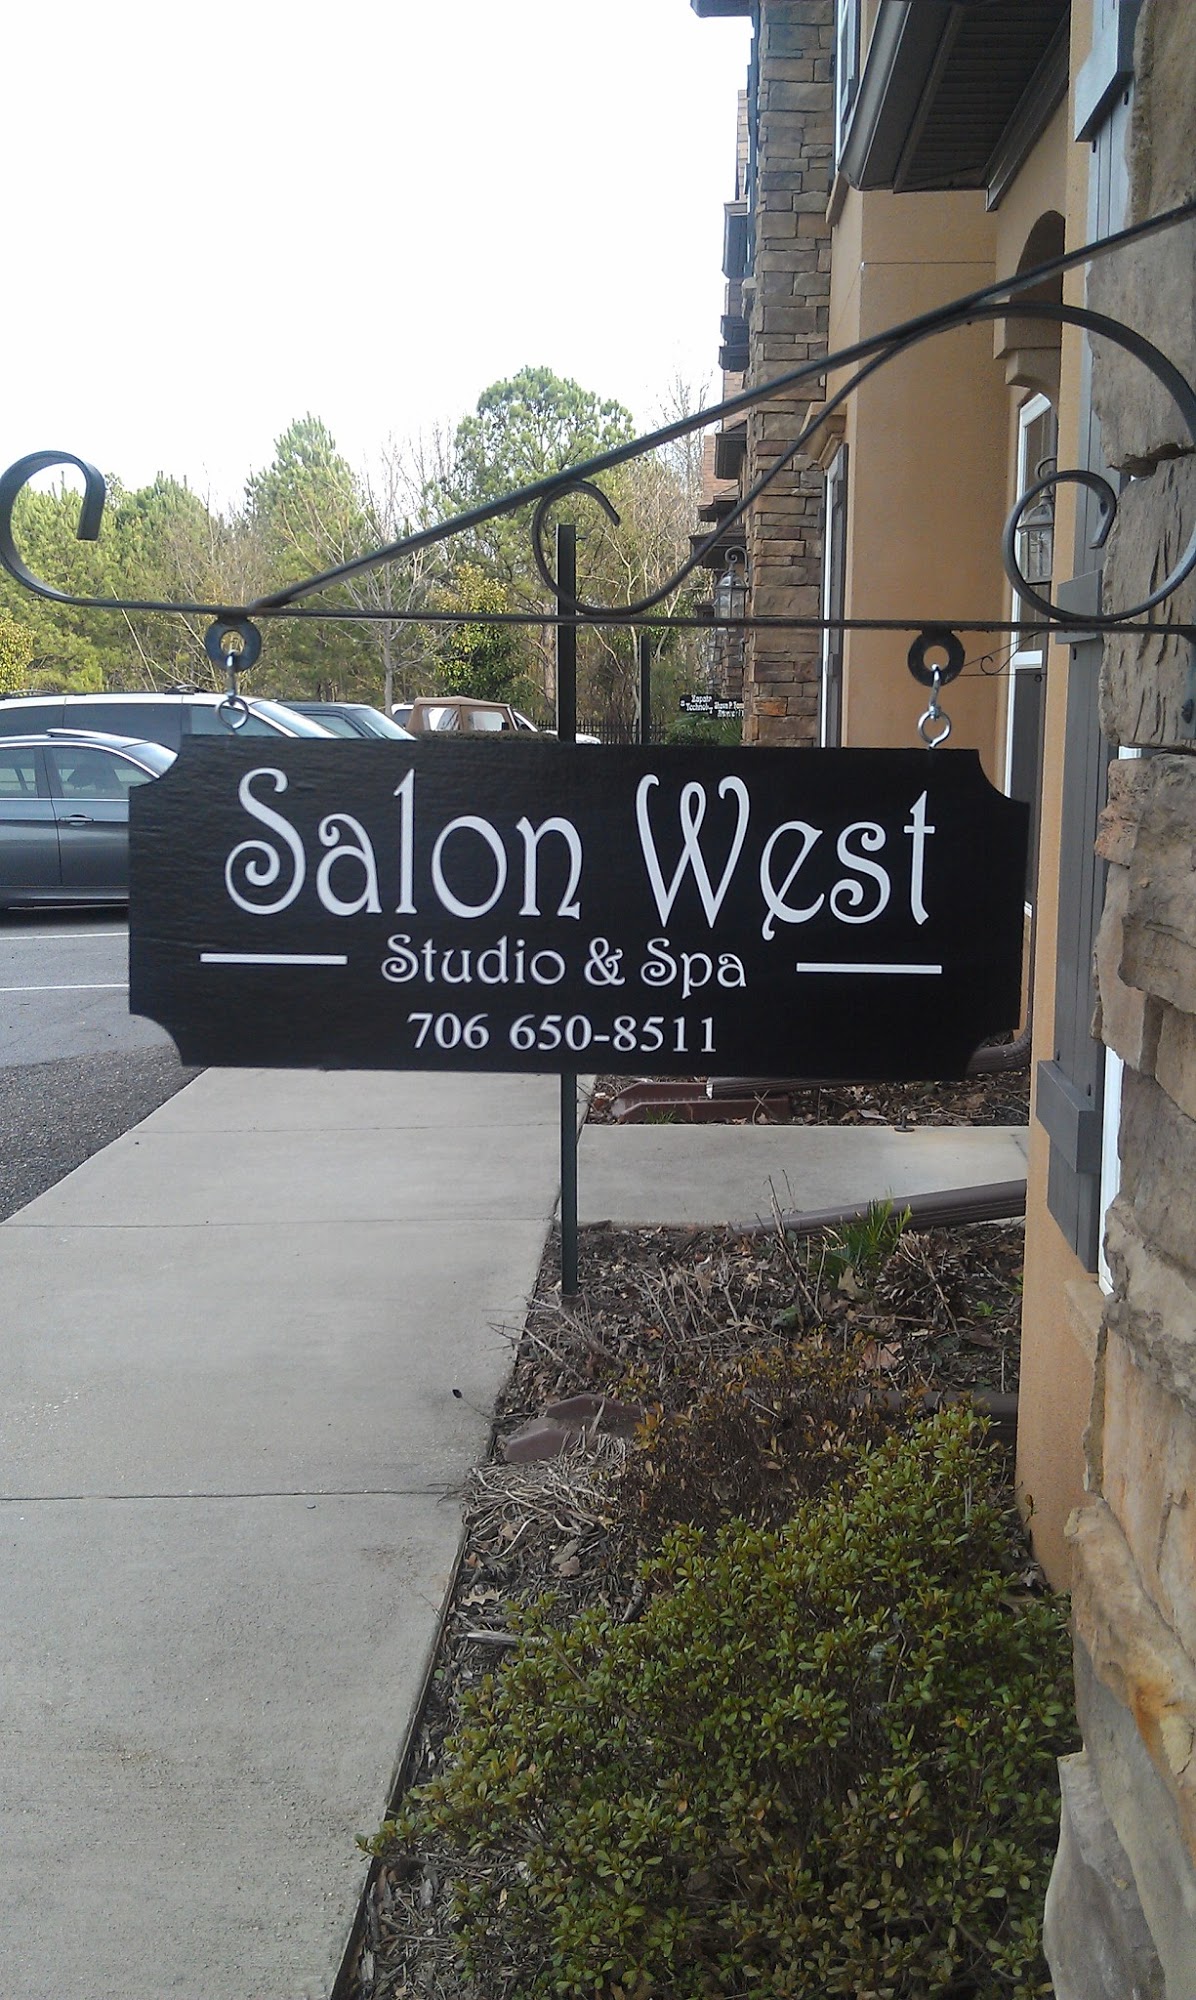 Salon West Studio & Spa